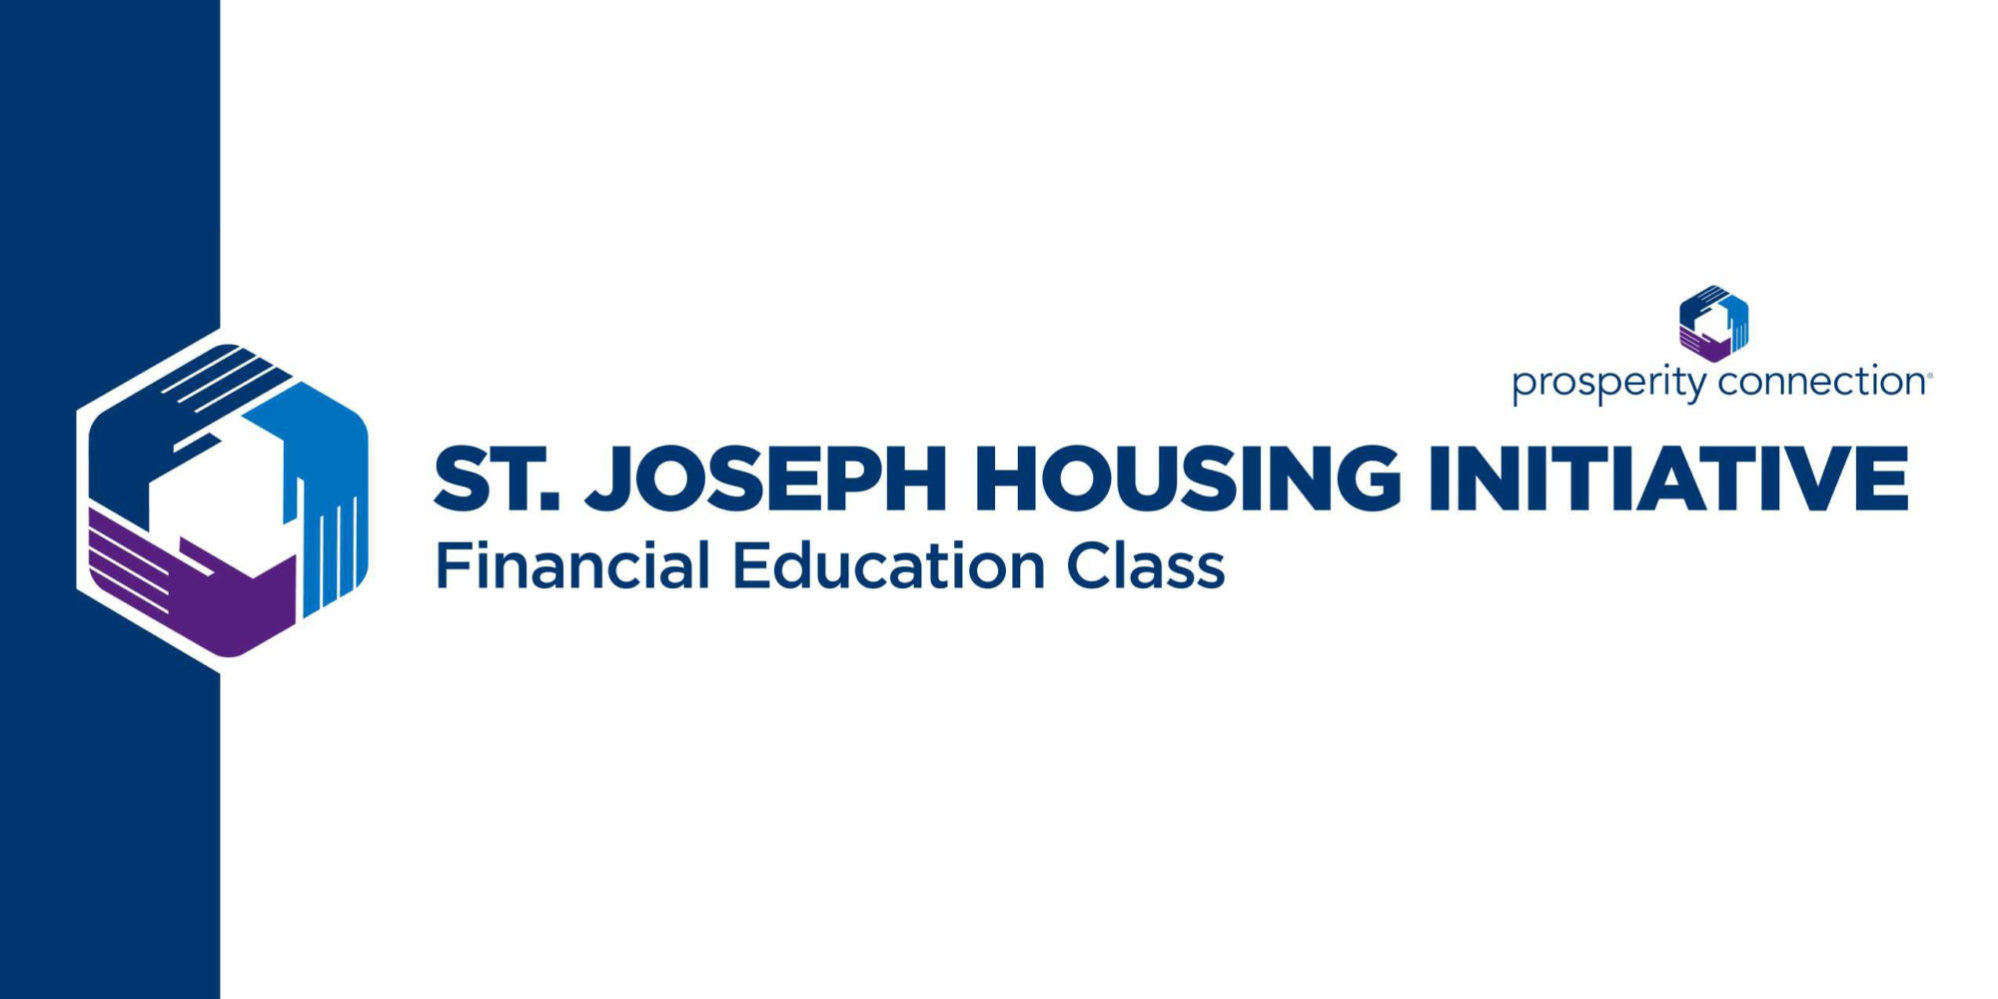 St. Joseph Housing Initiative Financial Education Class